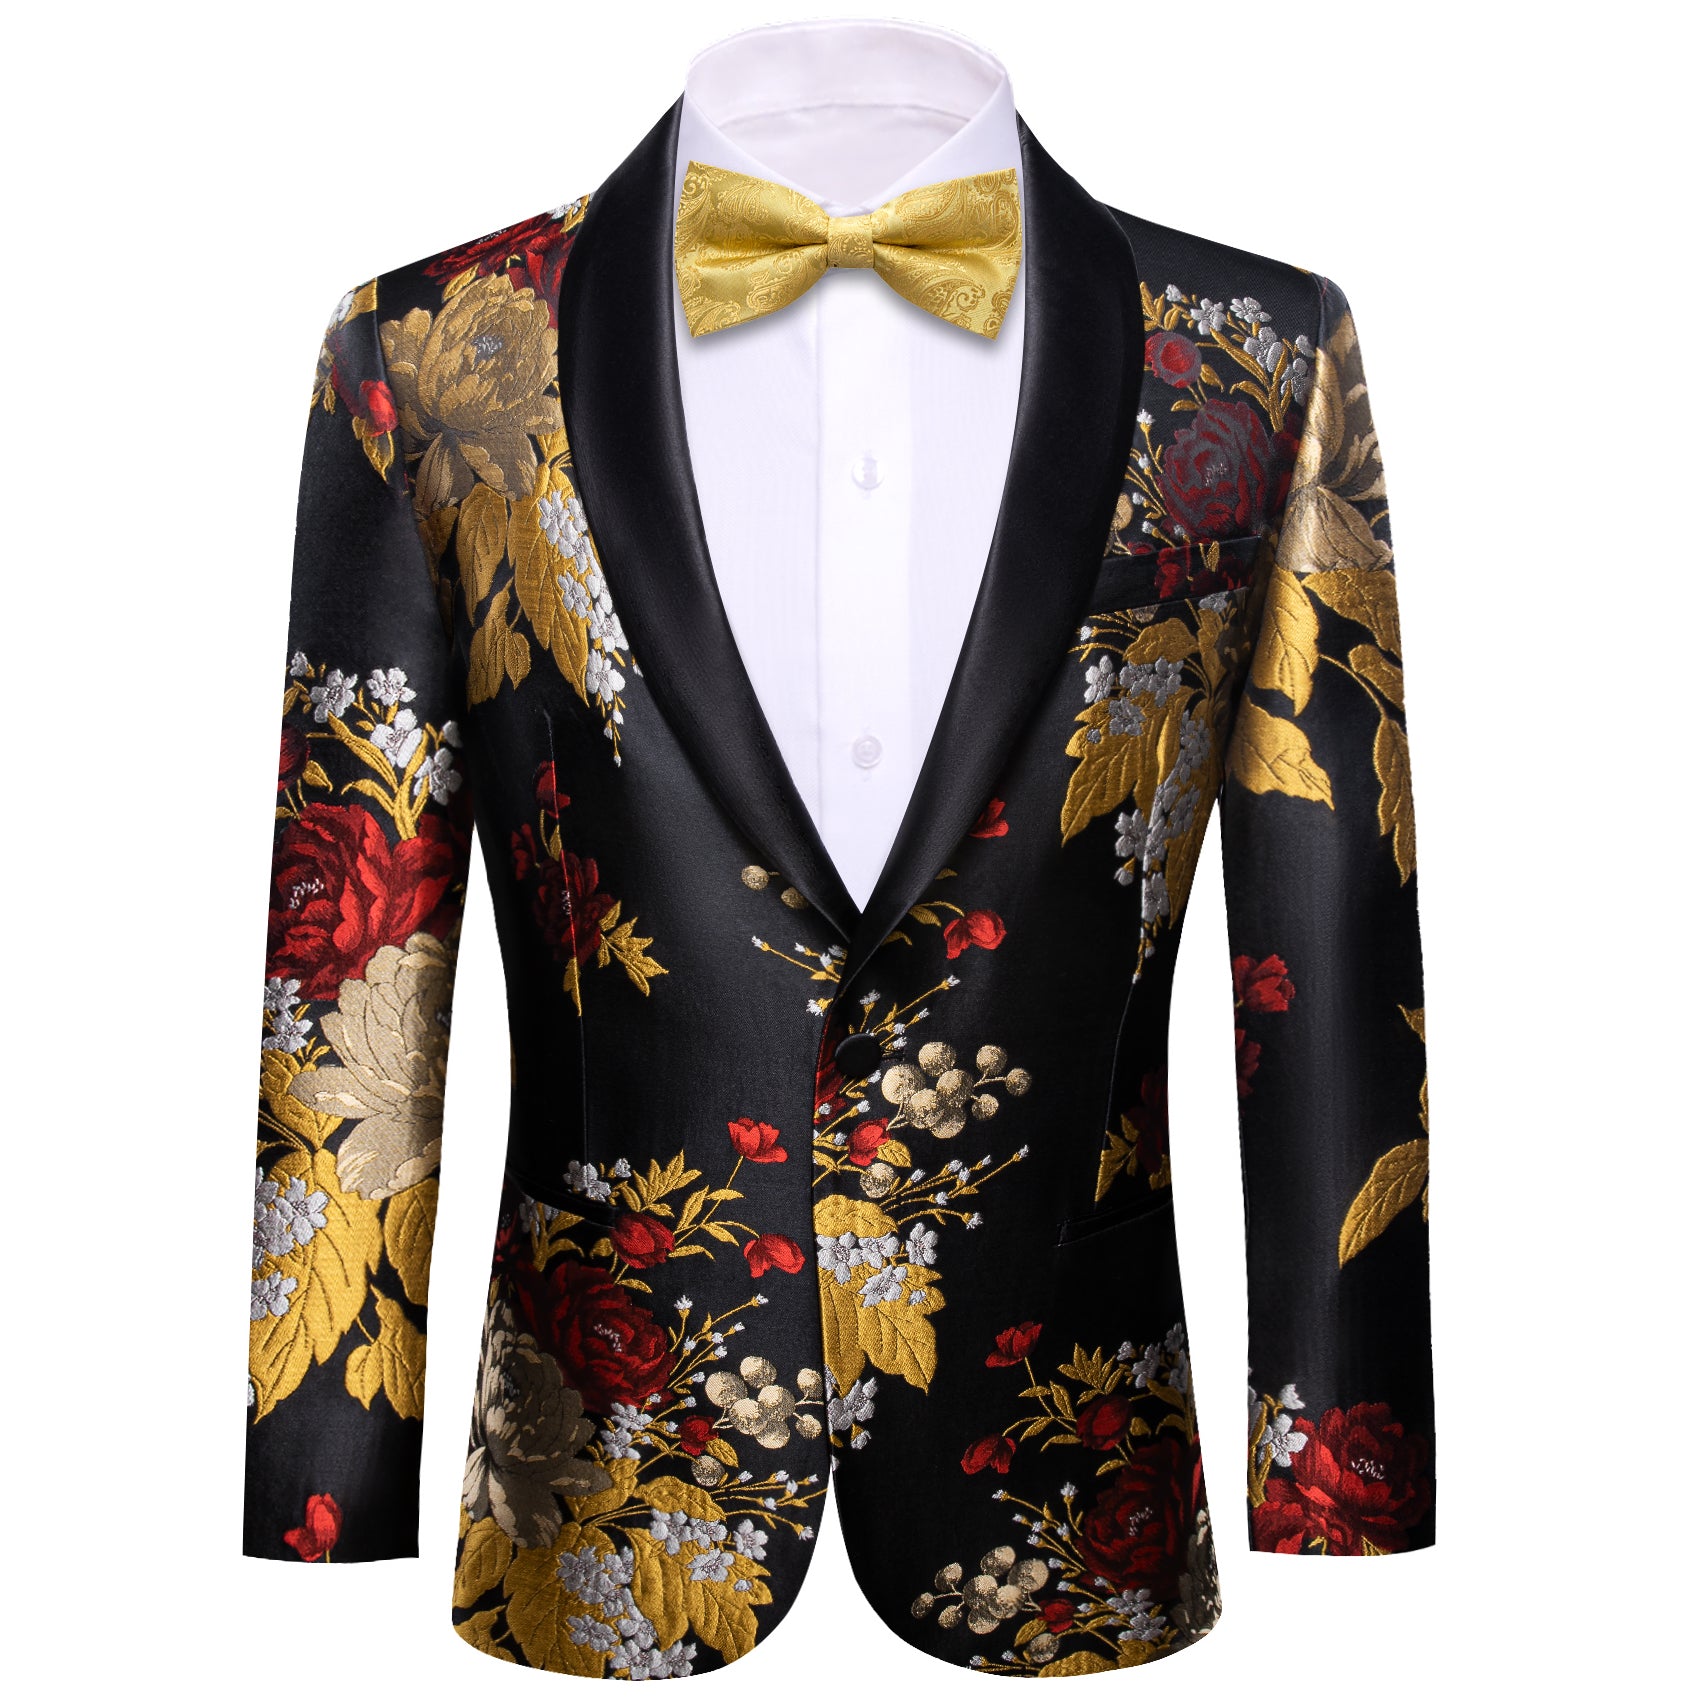 Barry.wang Shawl Collar Shirt Men's Black Yellow Floral Suit Jacket